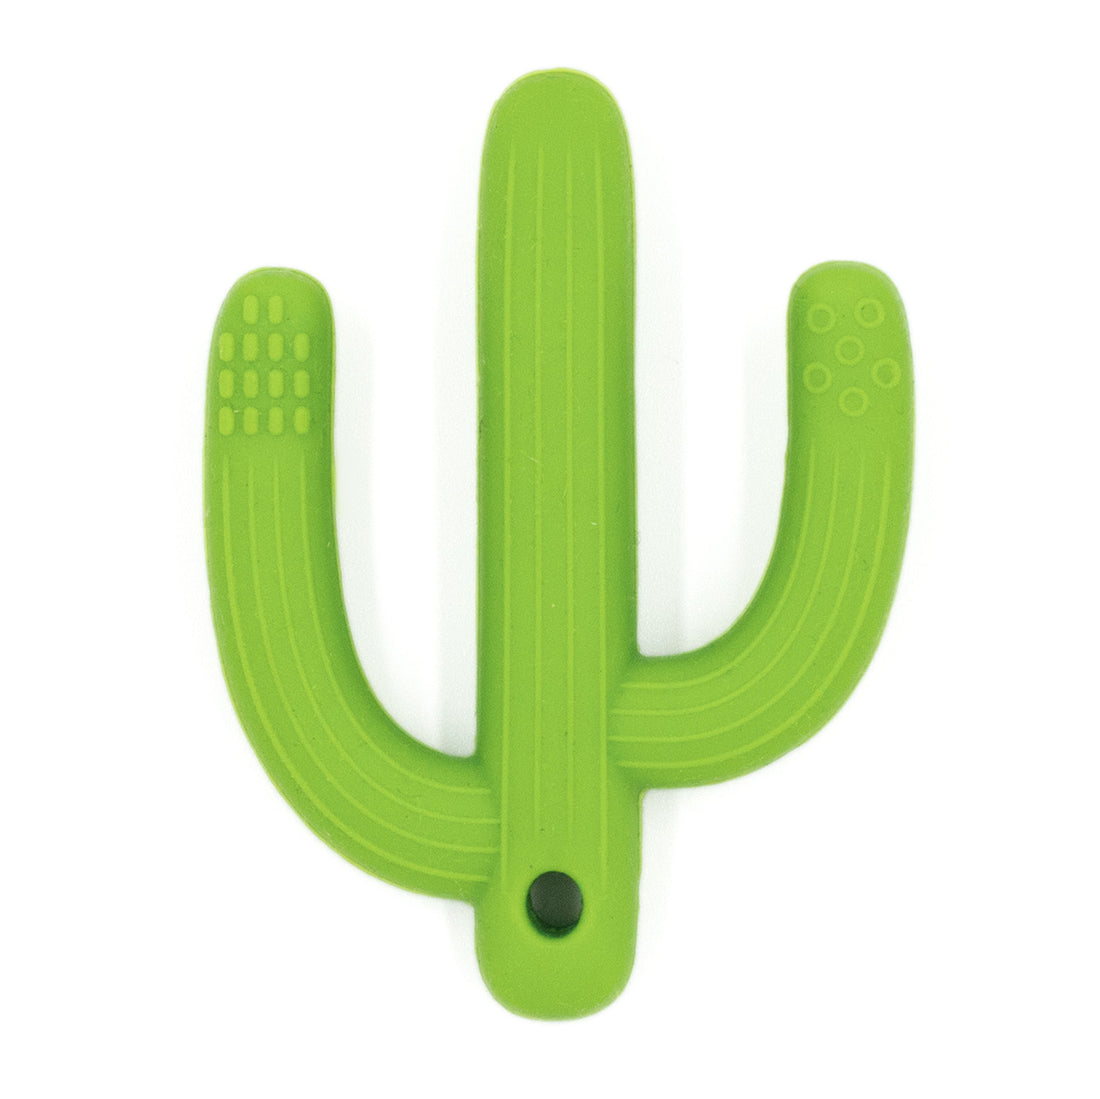 Cactus Brush Teether